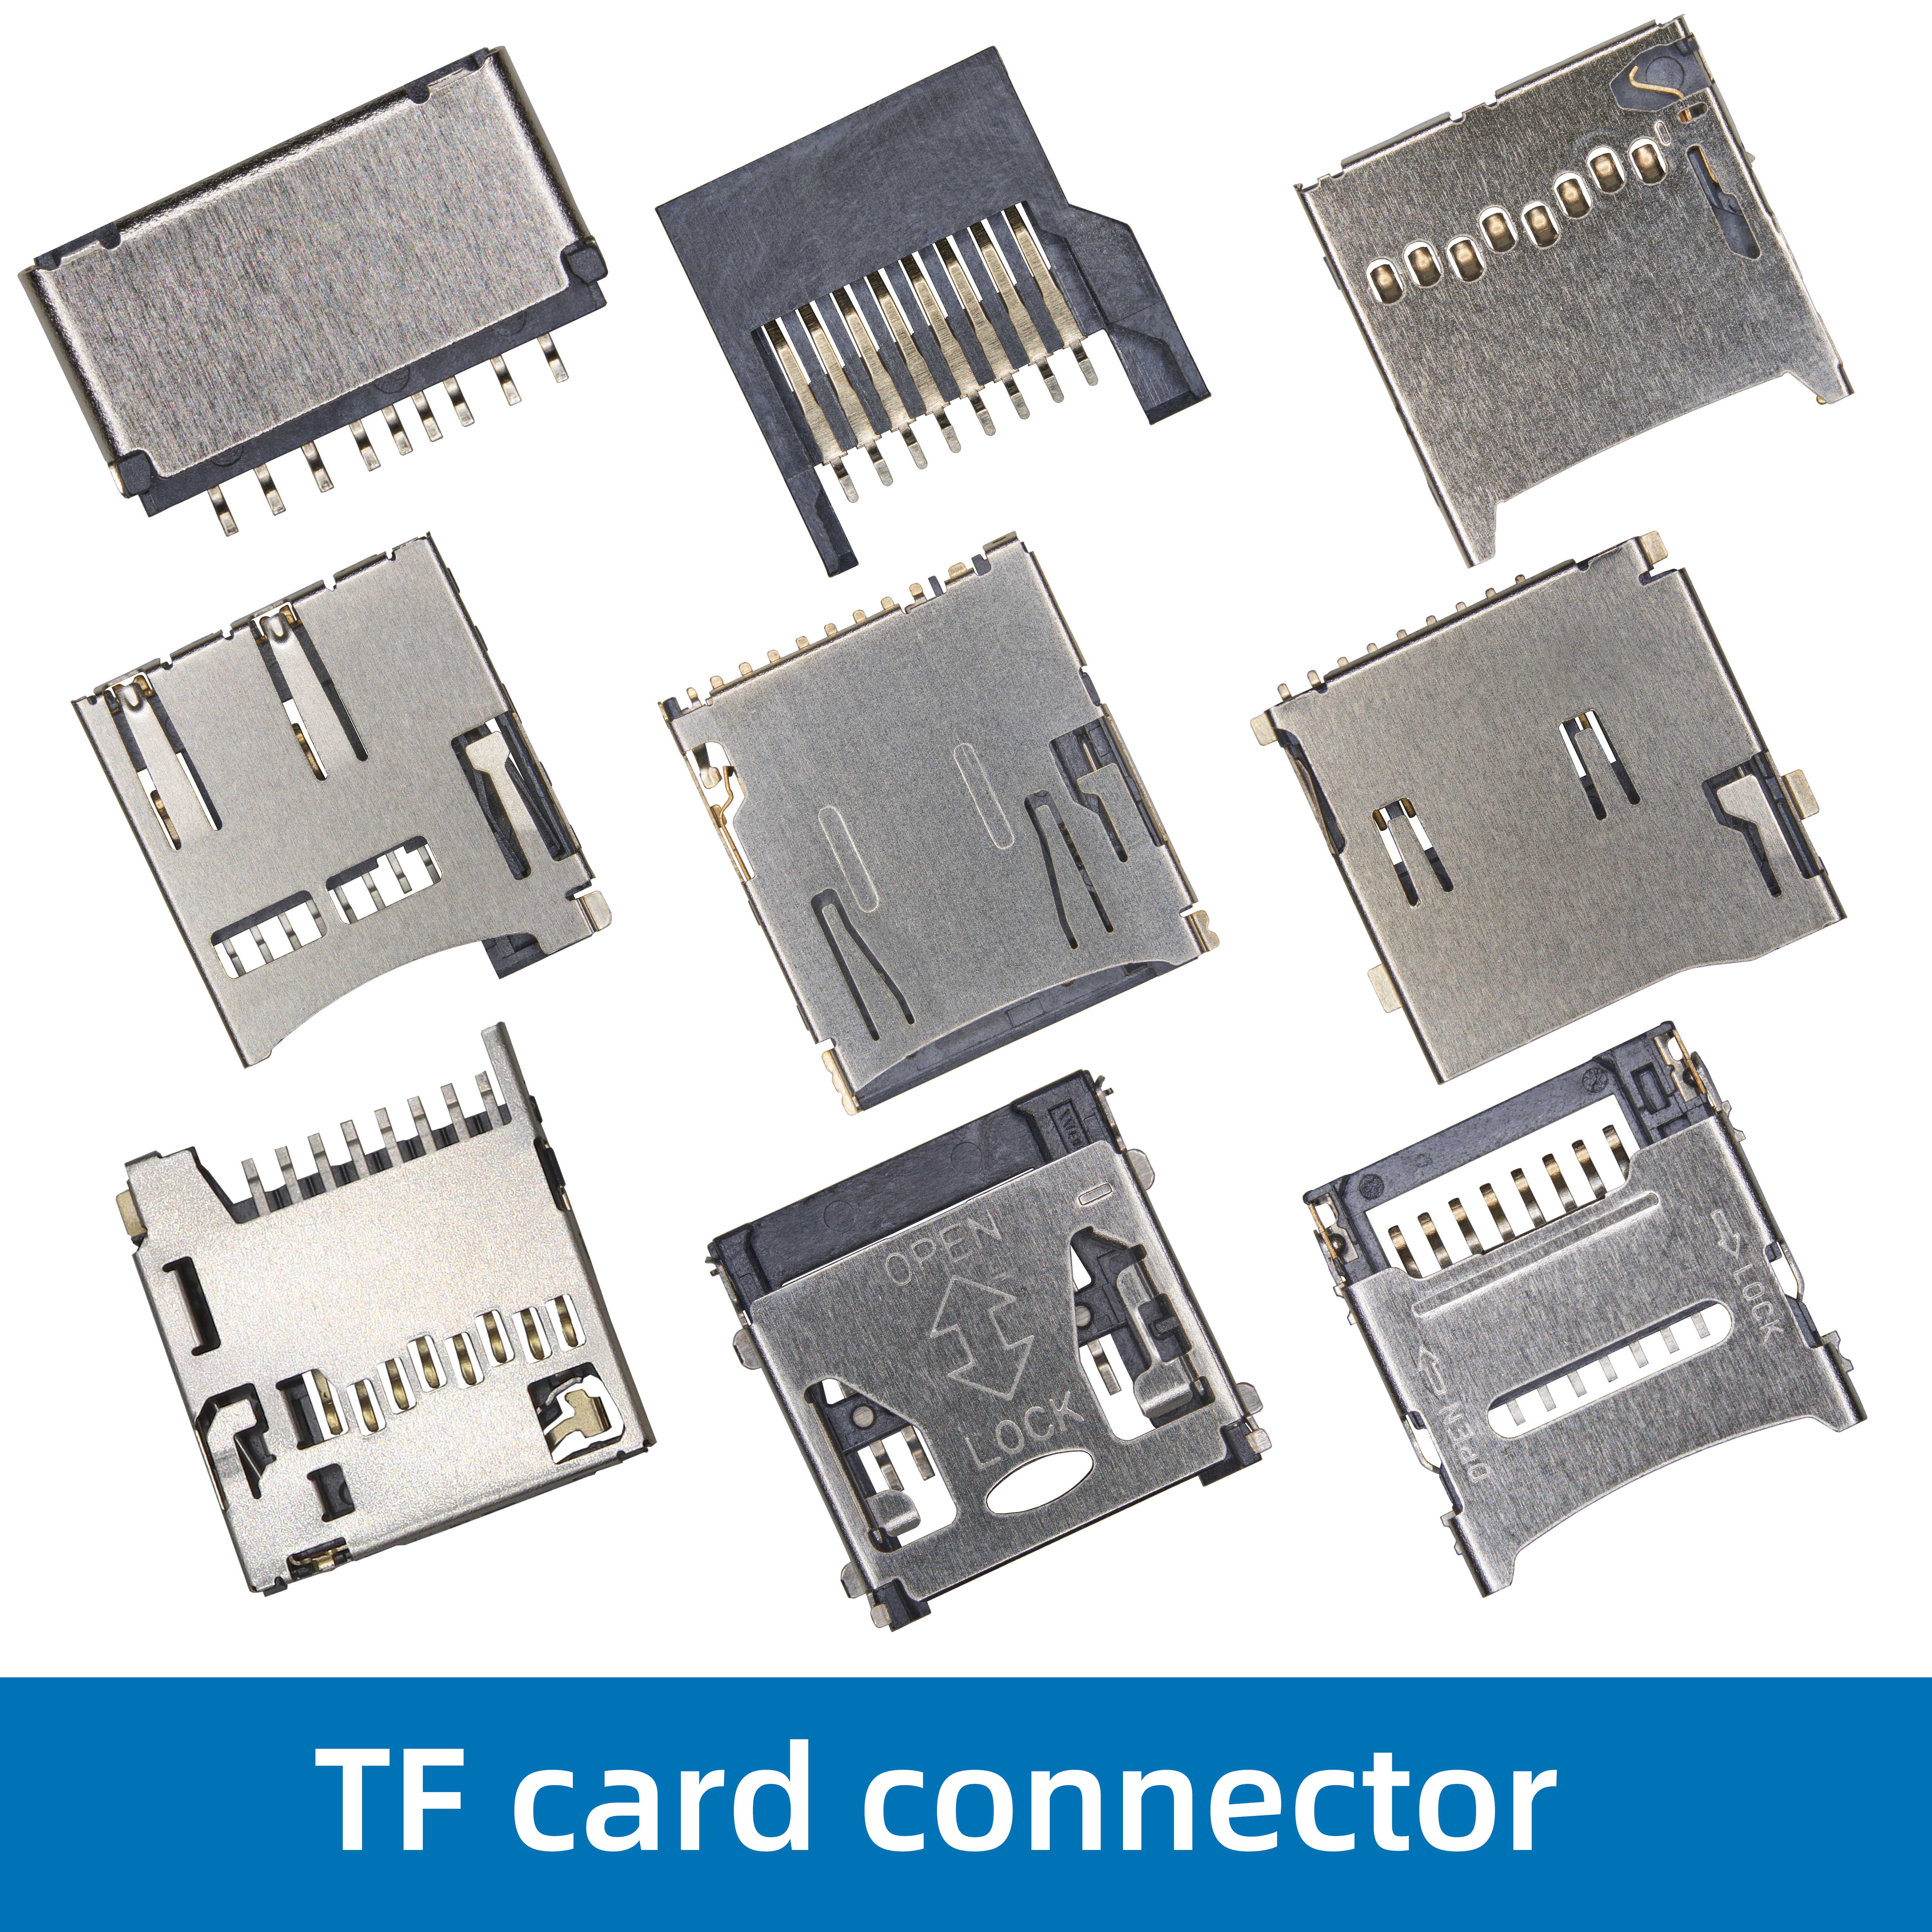 TF card connector